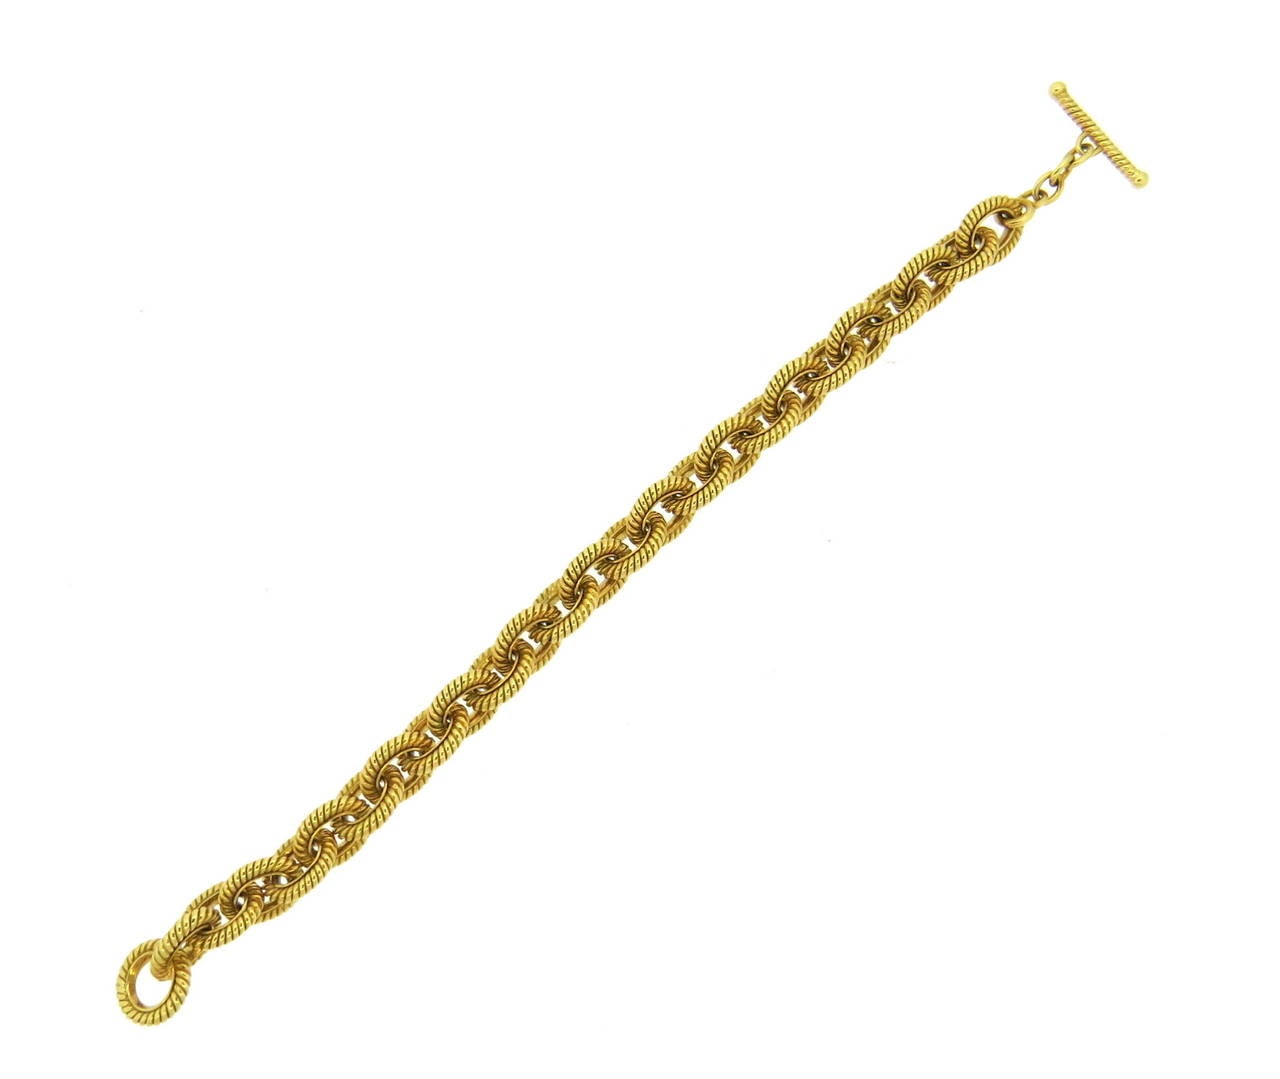 18k gold Tiffany & Co. link bracelet with toggle closure. Bracelet is 7 7/8